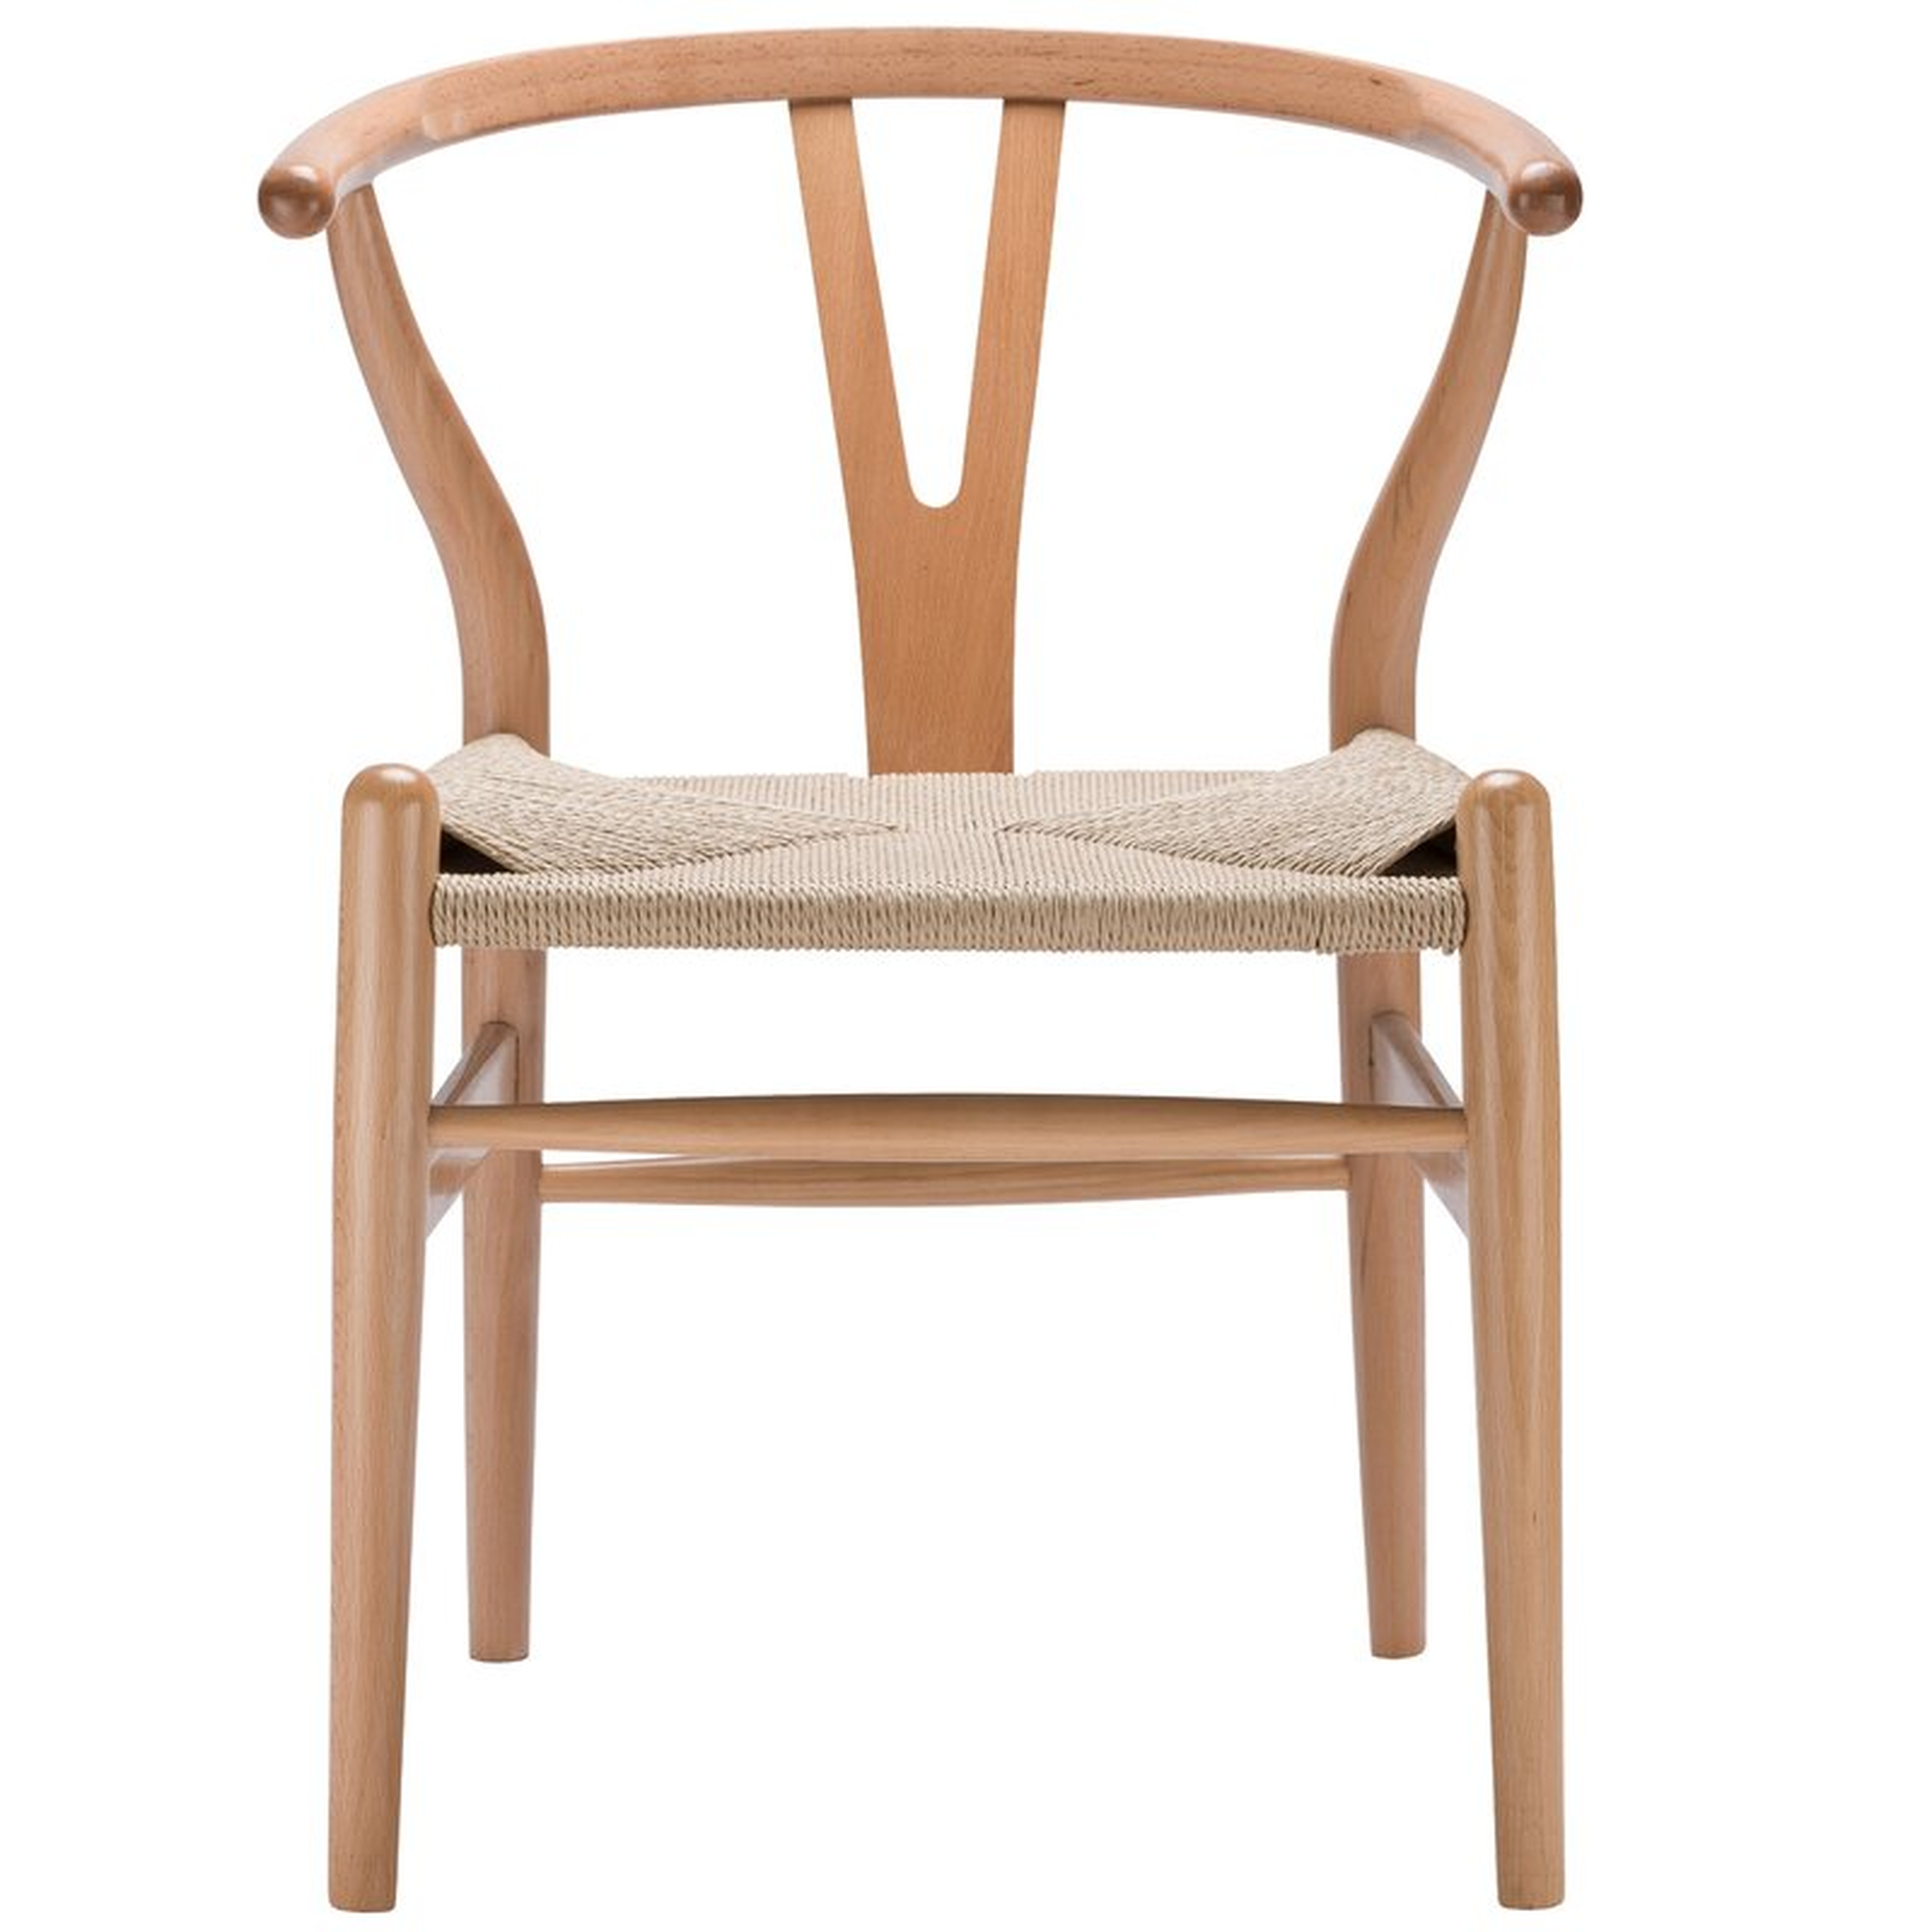 Dayanara Solid Wood Slat Back Side Chair, Natural - Wayfair